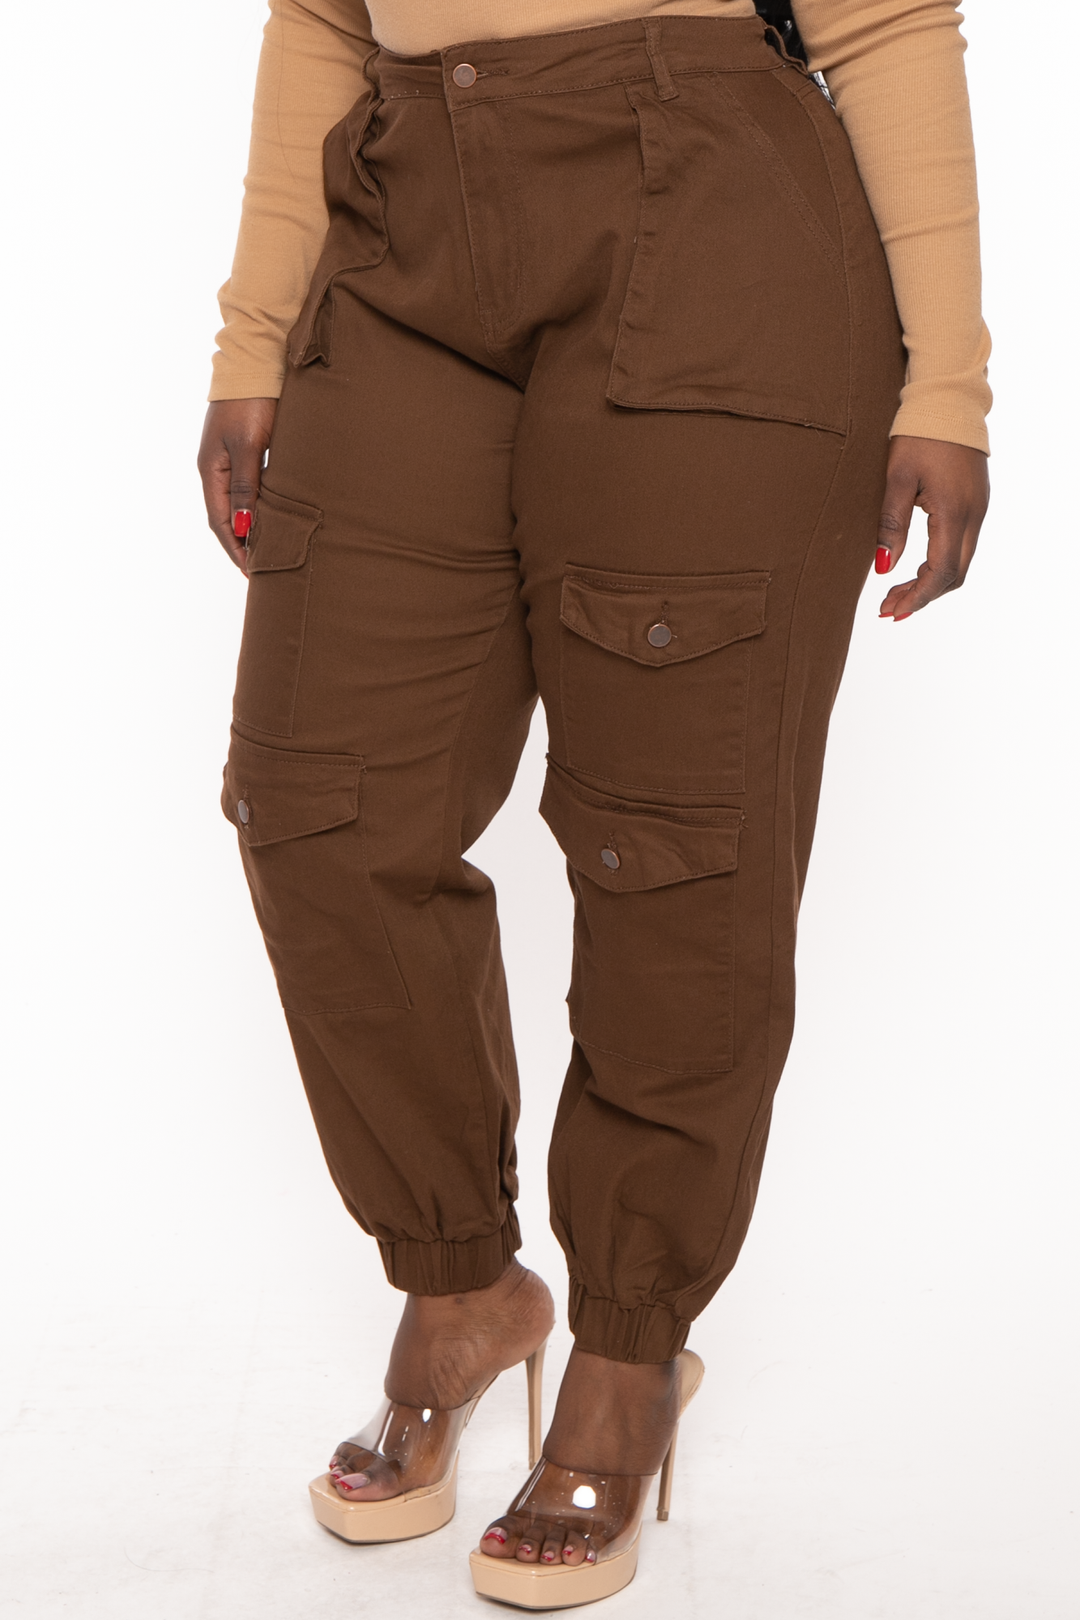 American Bazi Jeans Plus Size  High Rise Multi Pocket Jogger -Brown